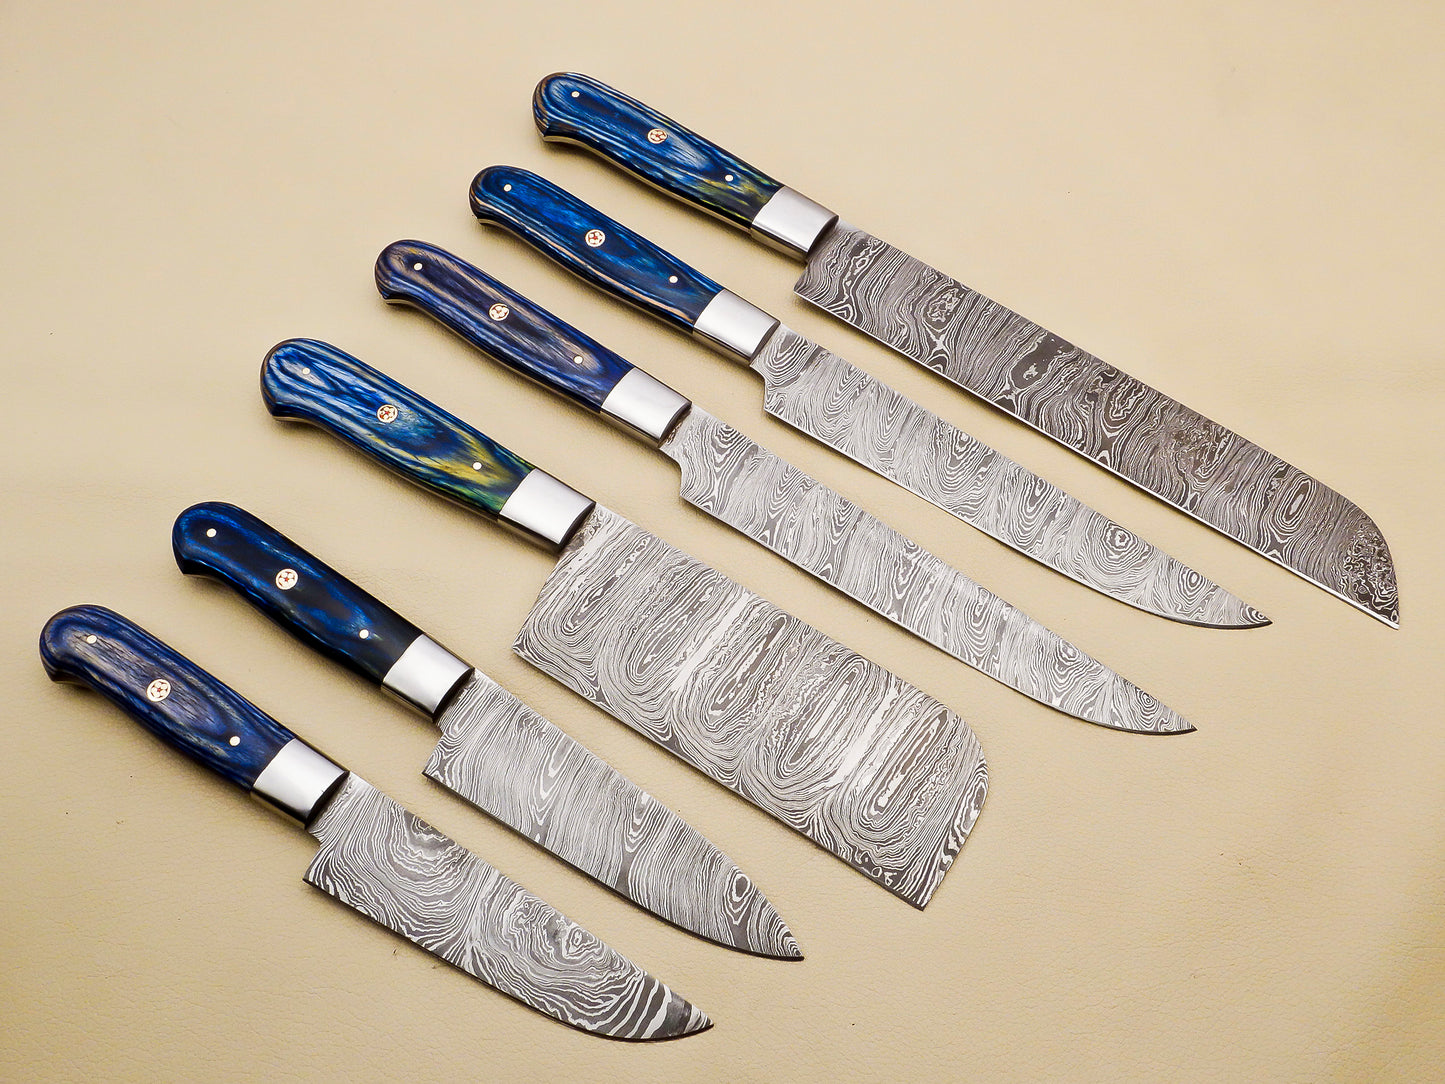 Damascus Steel Kitchen / Chef Knives set